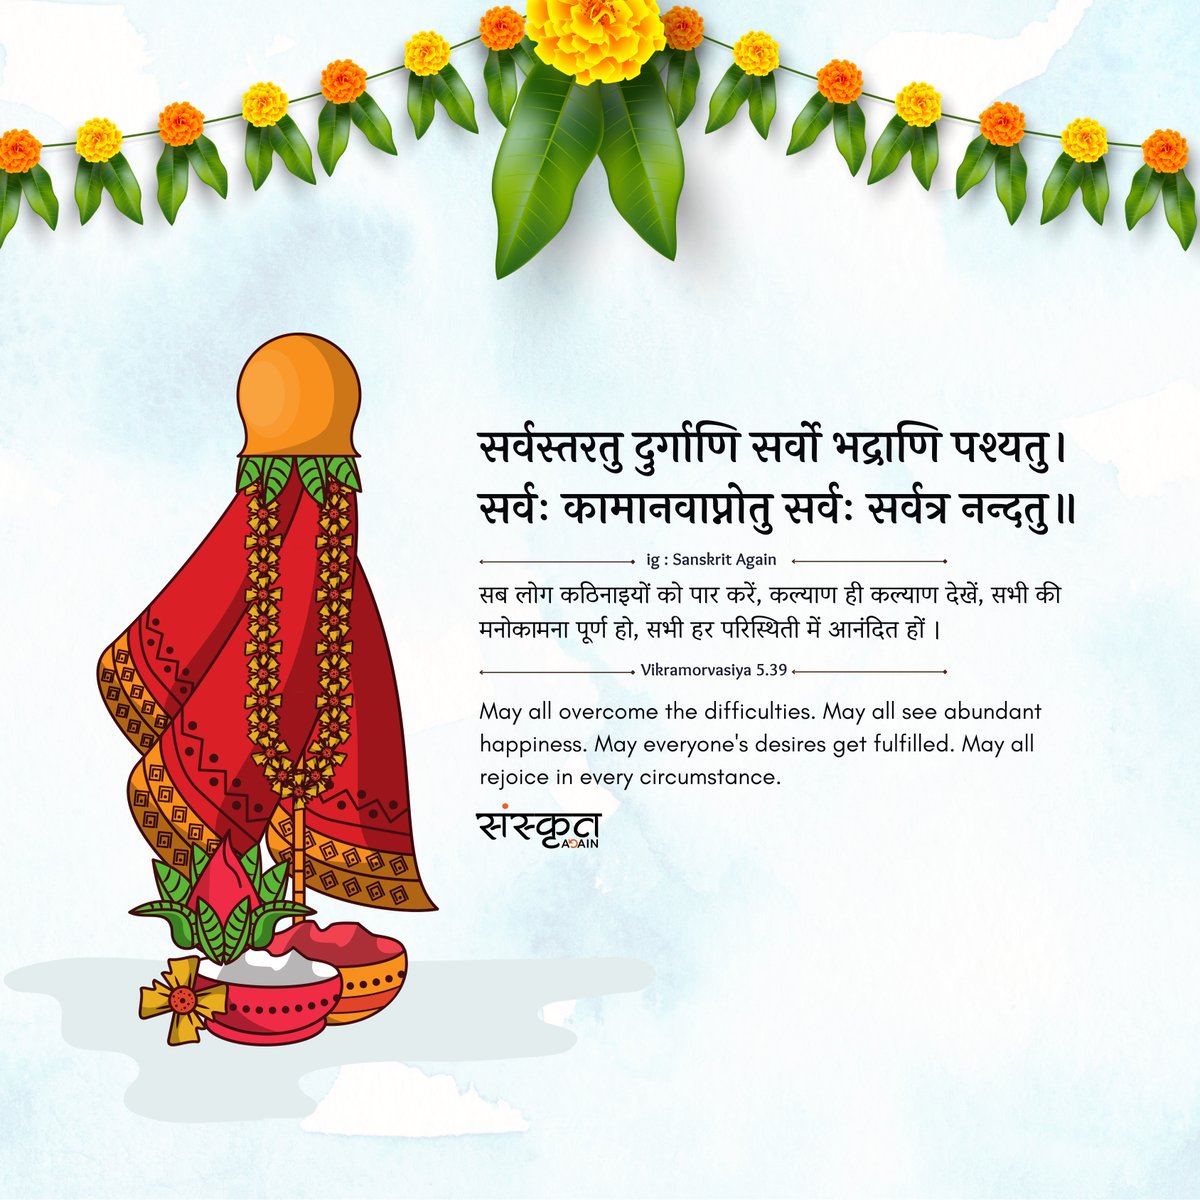 चैत्र नवरात्र एवं नव वर्ष २०८० की हार्दिक शुभकामनाएँ। 

#HappyChaitraNavratri #Celebrations #IndianCulture #Shubhakamana #Celebrations #Traditions #sanskrit #india #gudipadwa #newyear #traditions #gudipadwa2023 #shloka #quote #newbeginnings